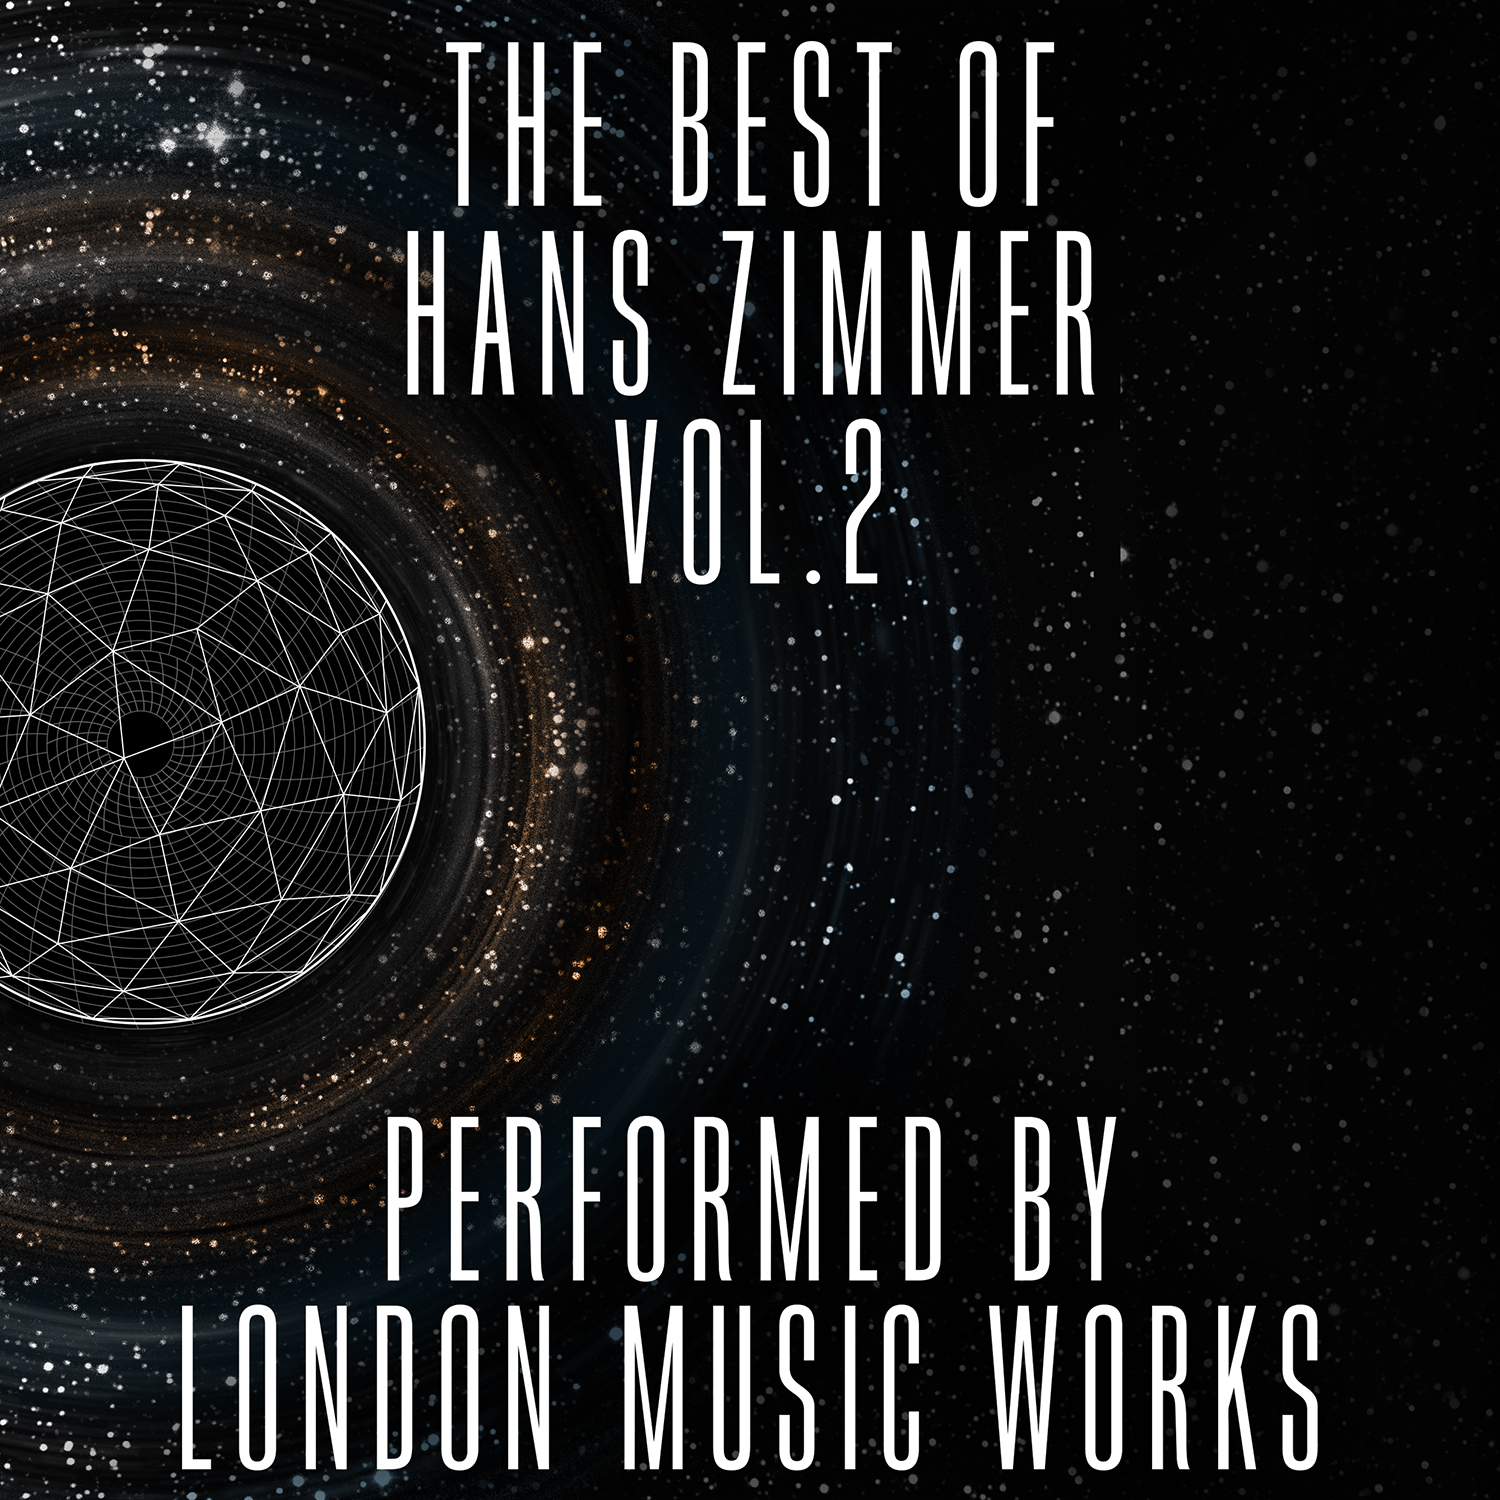 The Best of Hans Zimmer Vol.2